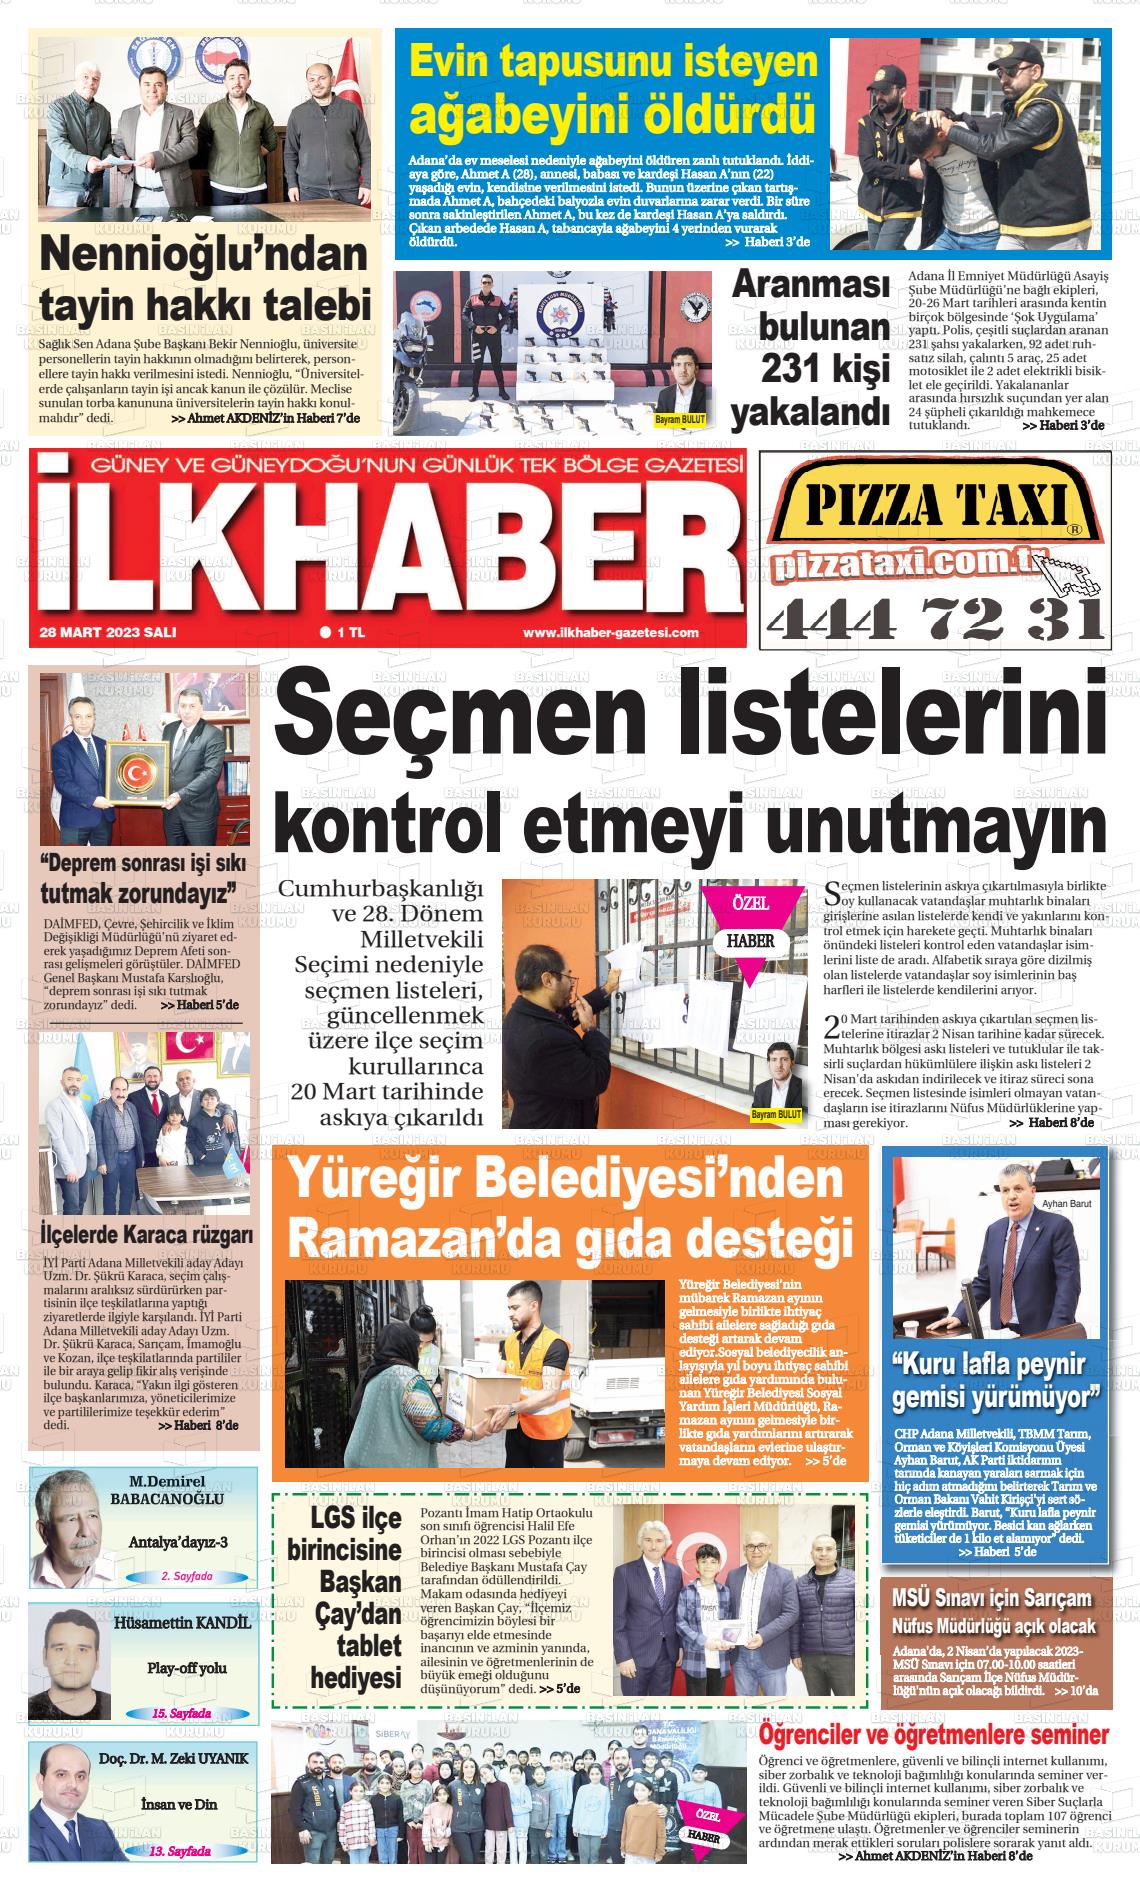 28 Mart 2023 İlk Haber Gazete Manşeti